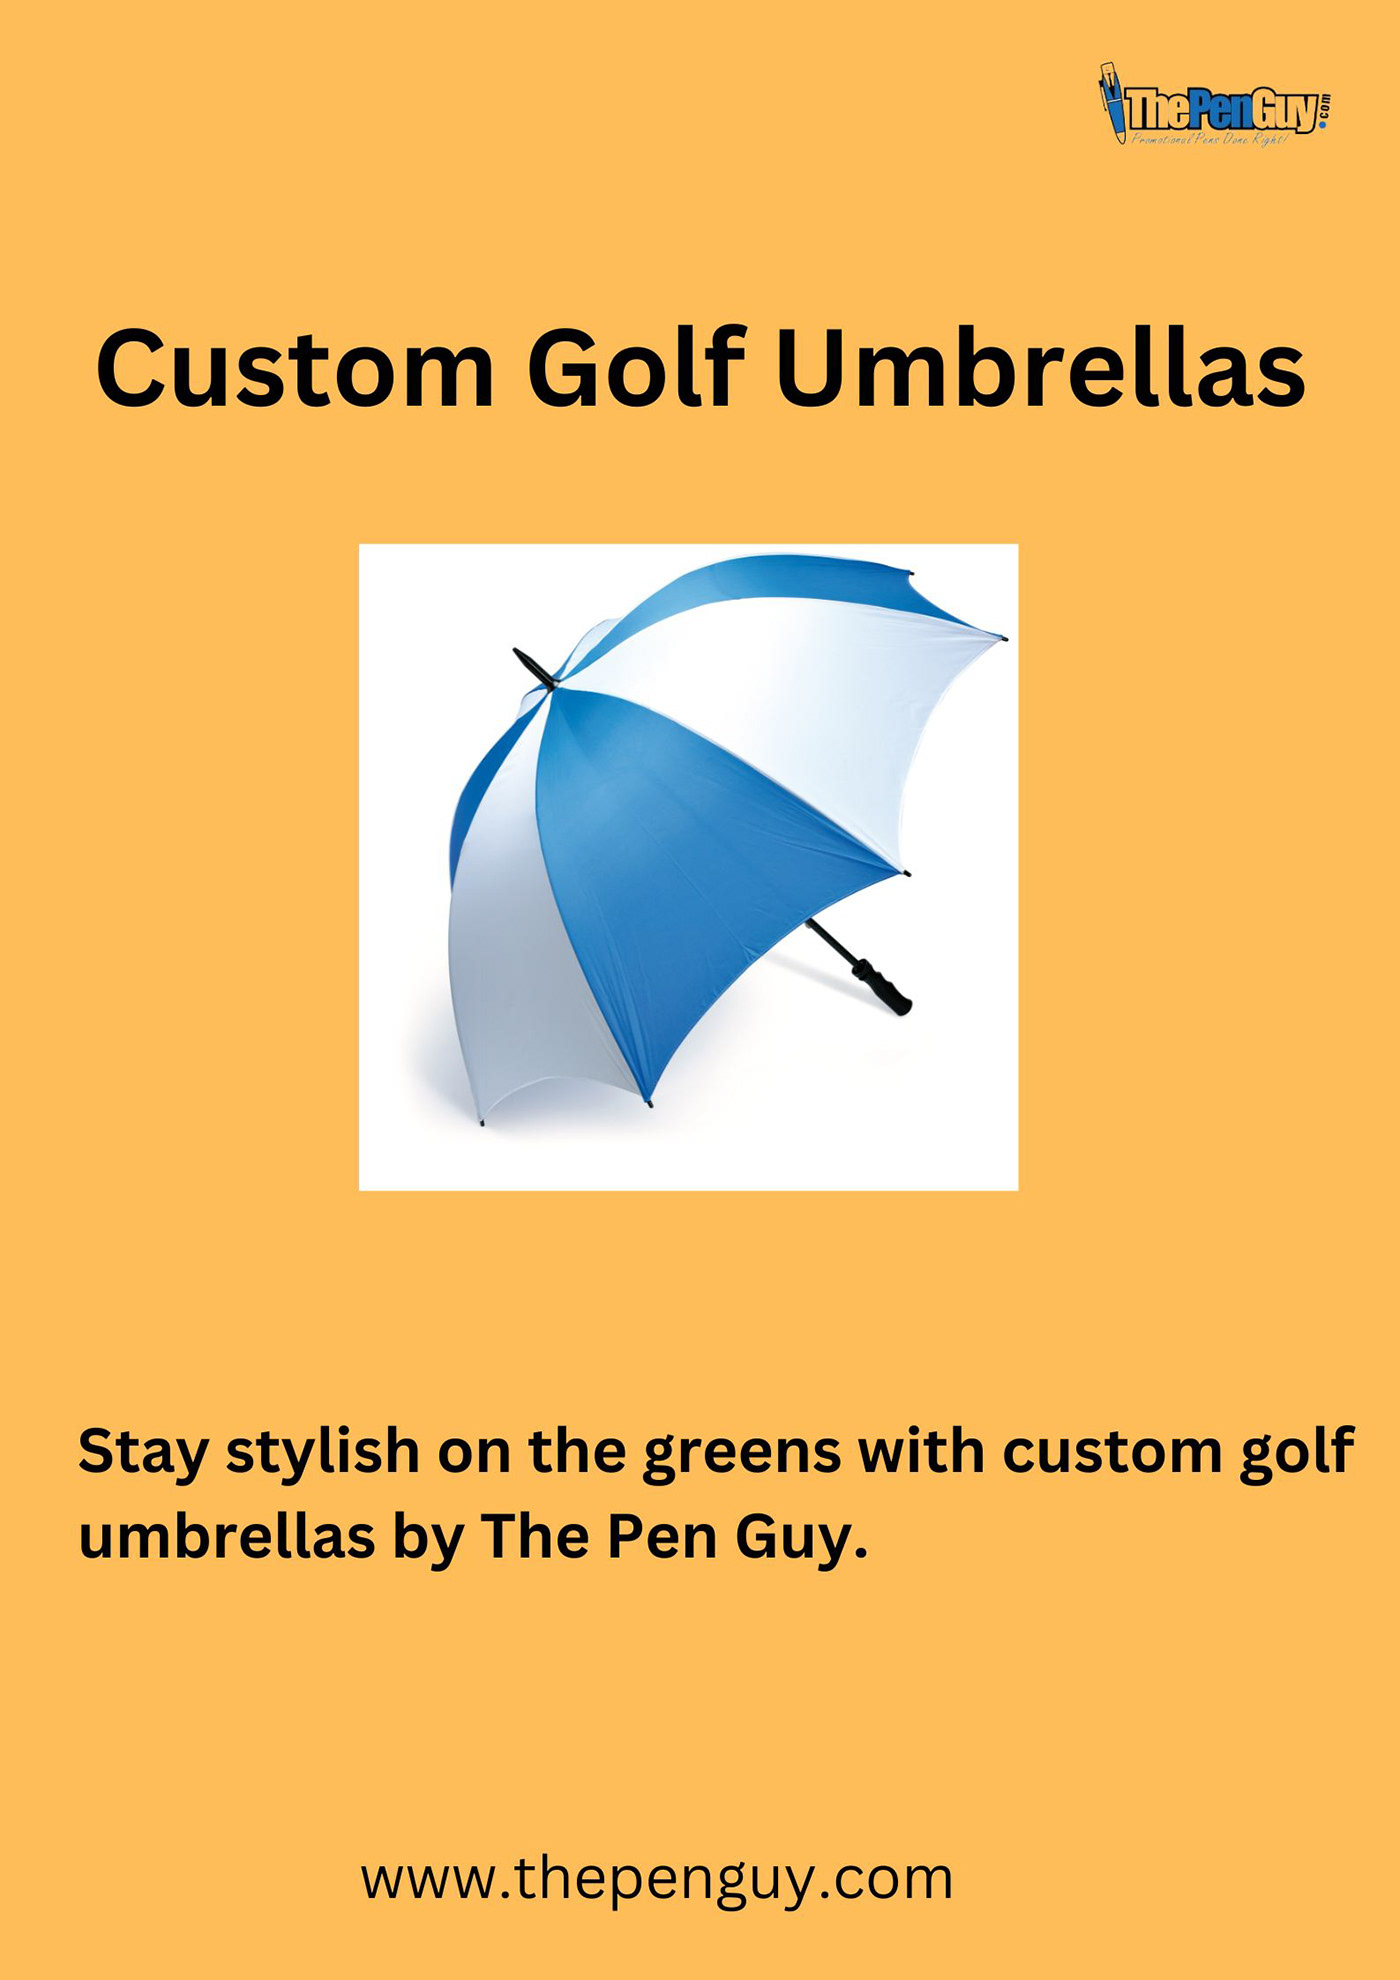 customgolfumbrellas custompocketscrewdrivers CustomRopeHats promotionalbicclicpens